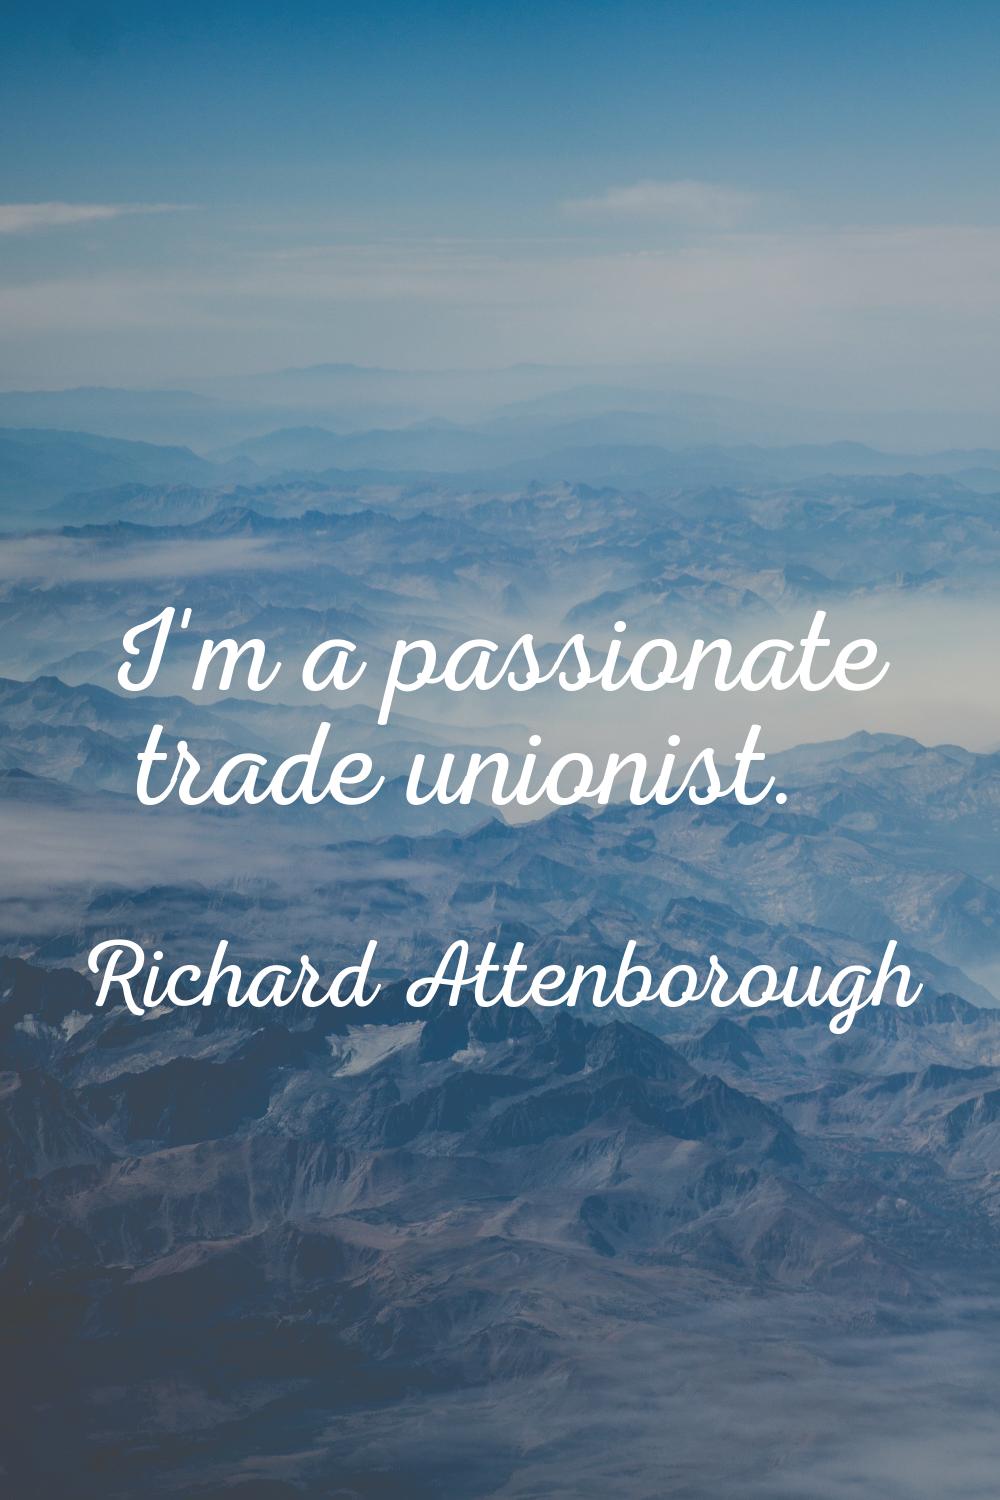 I'm a passionate trade unionist.